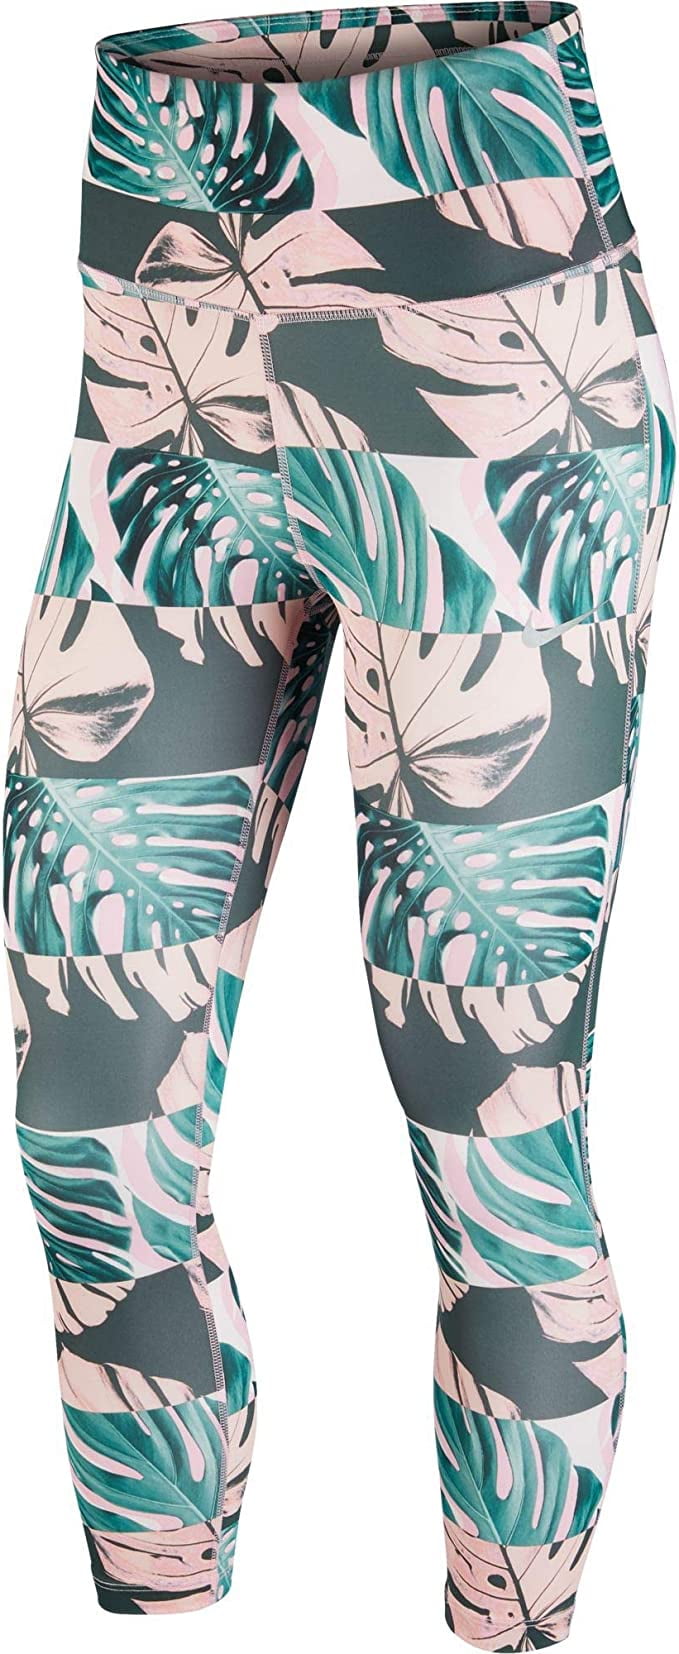 Nike Dry Women's Botanical Print Fast Crop Tight fit Leggings